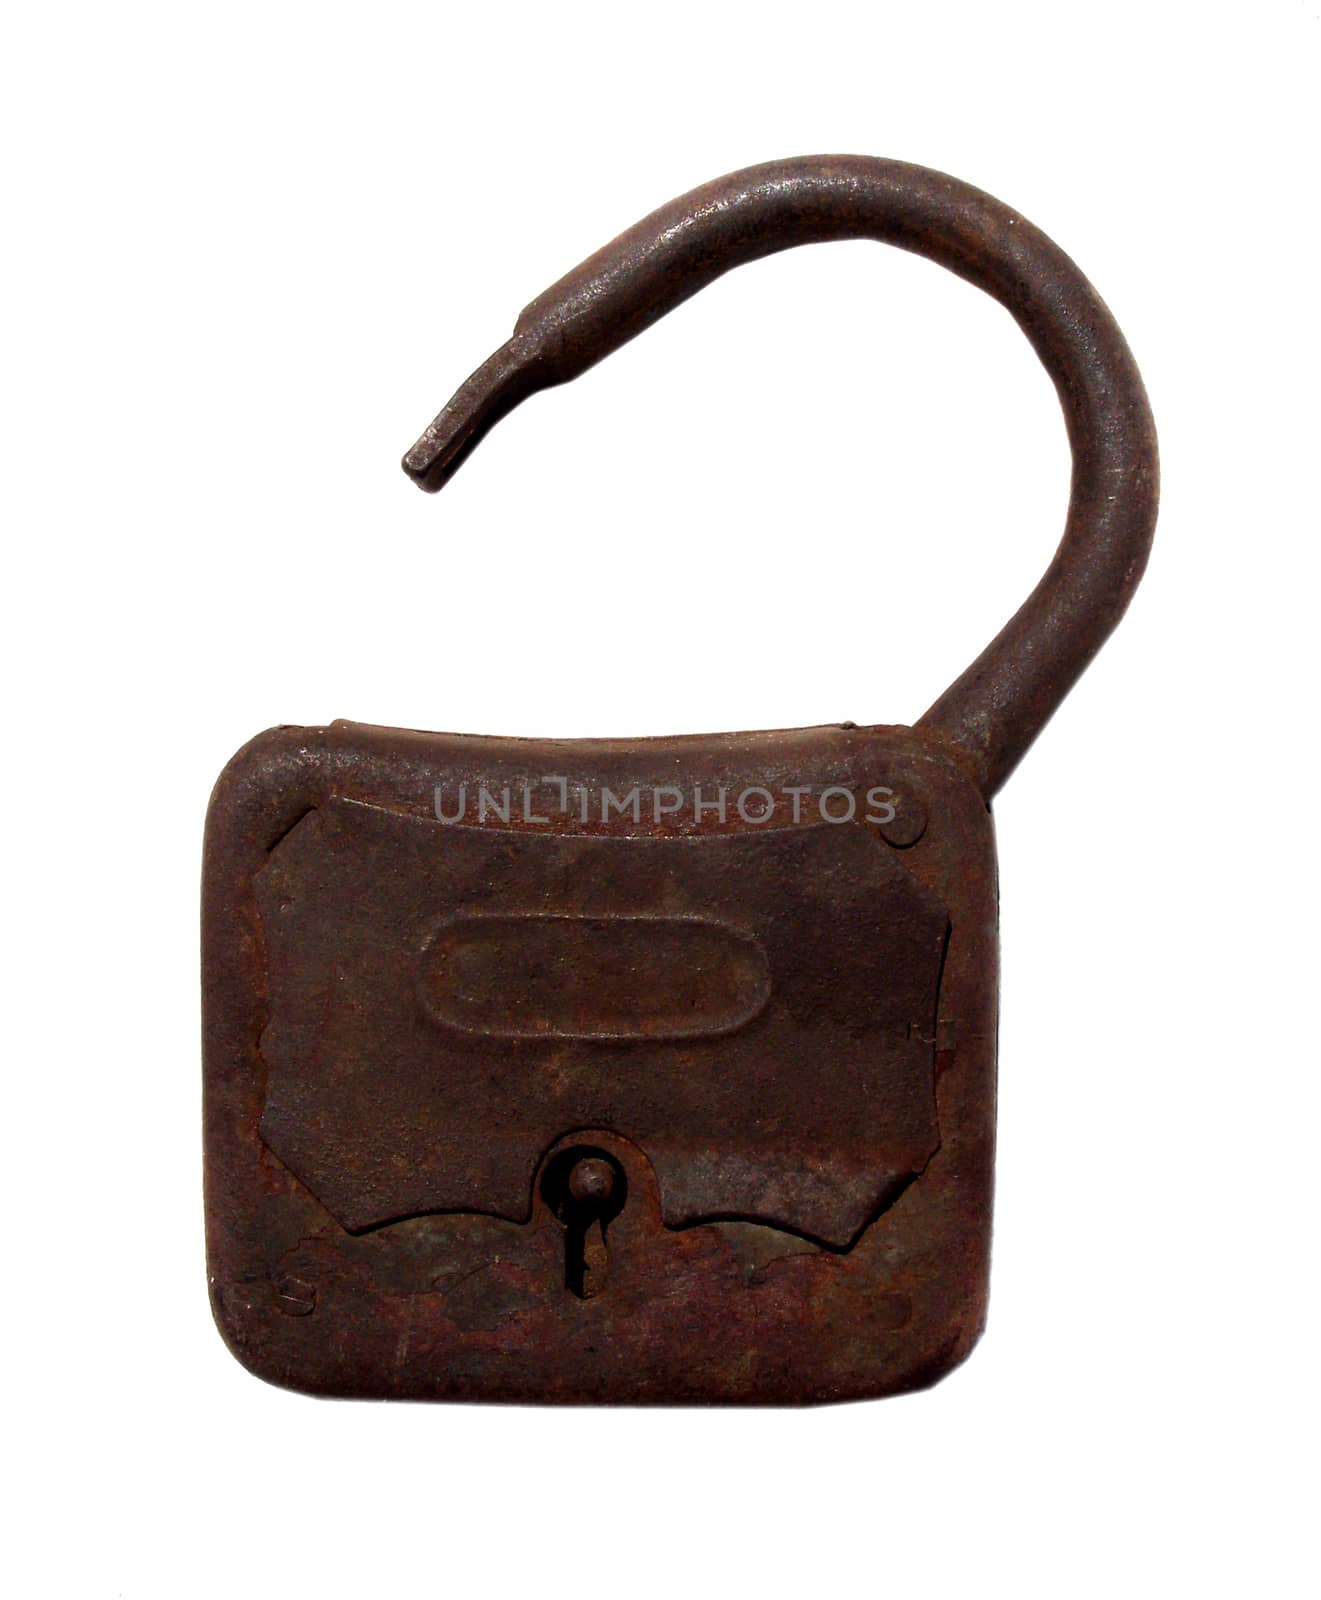 Old rusty padlock on white background